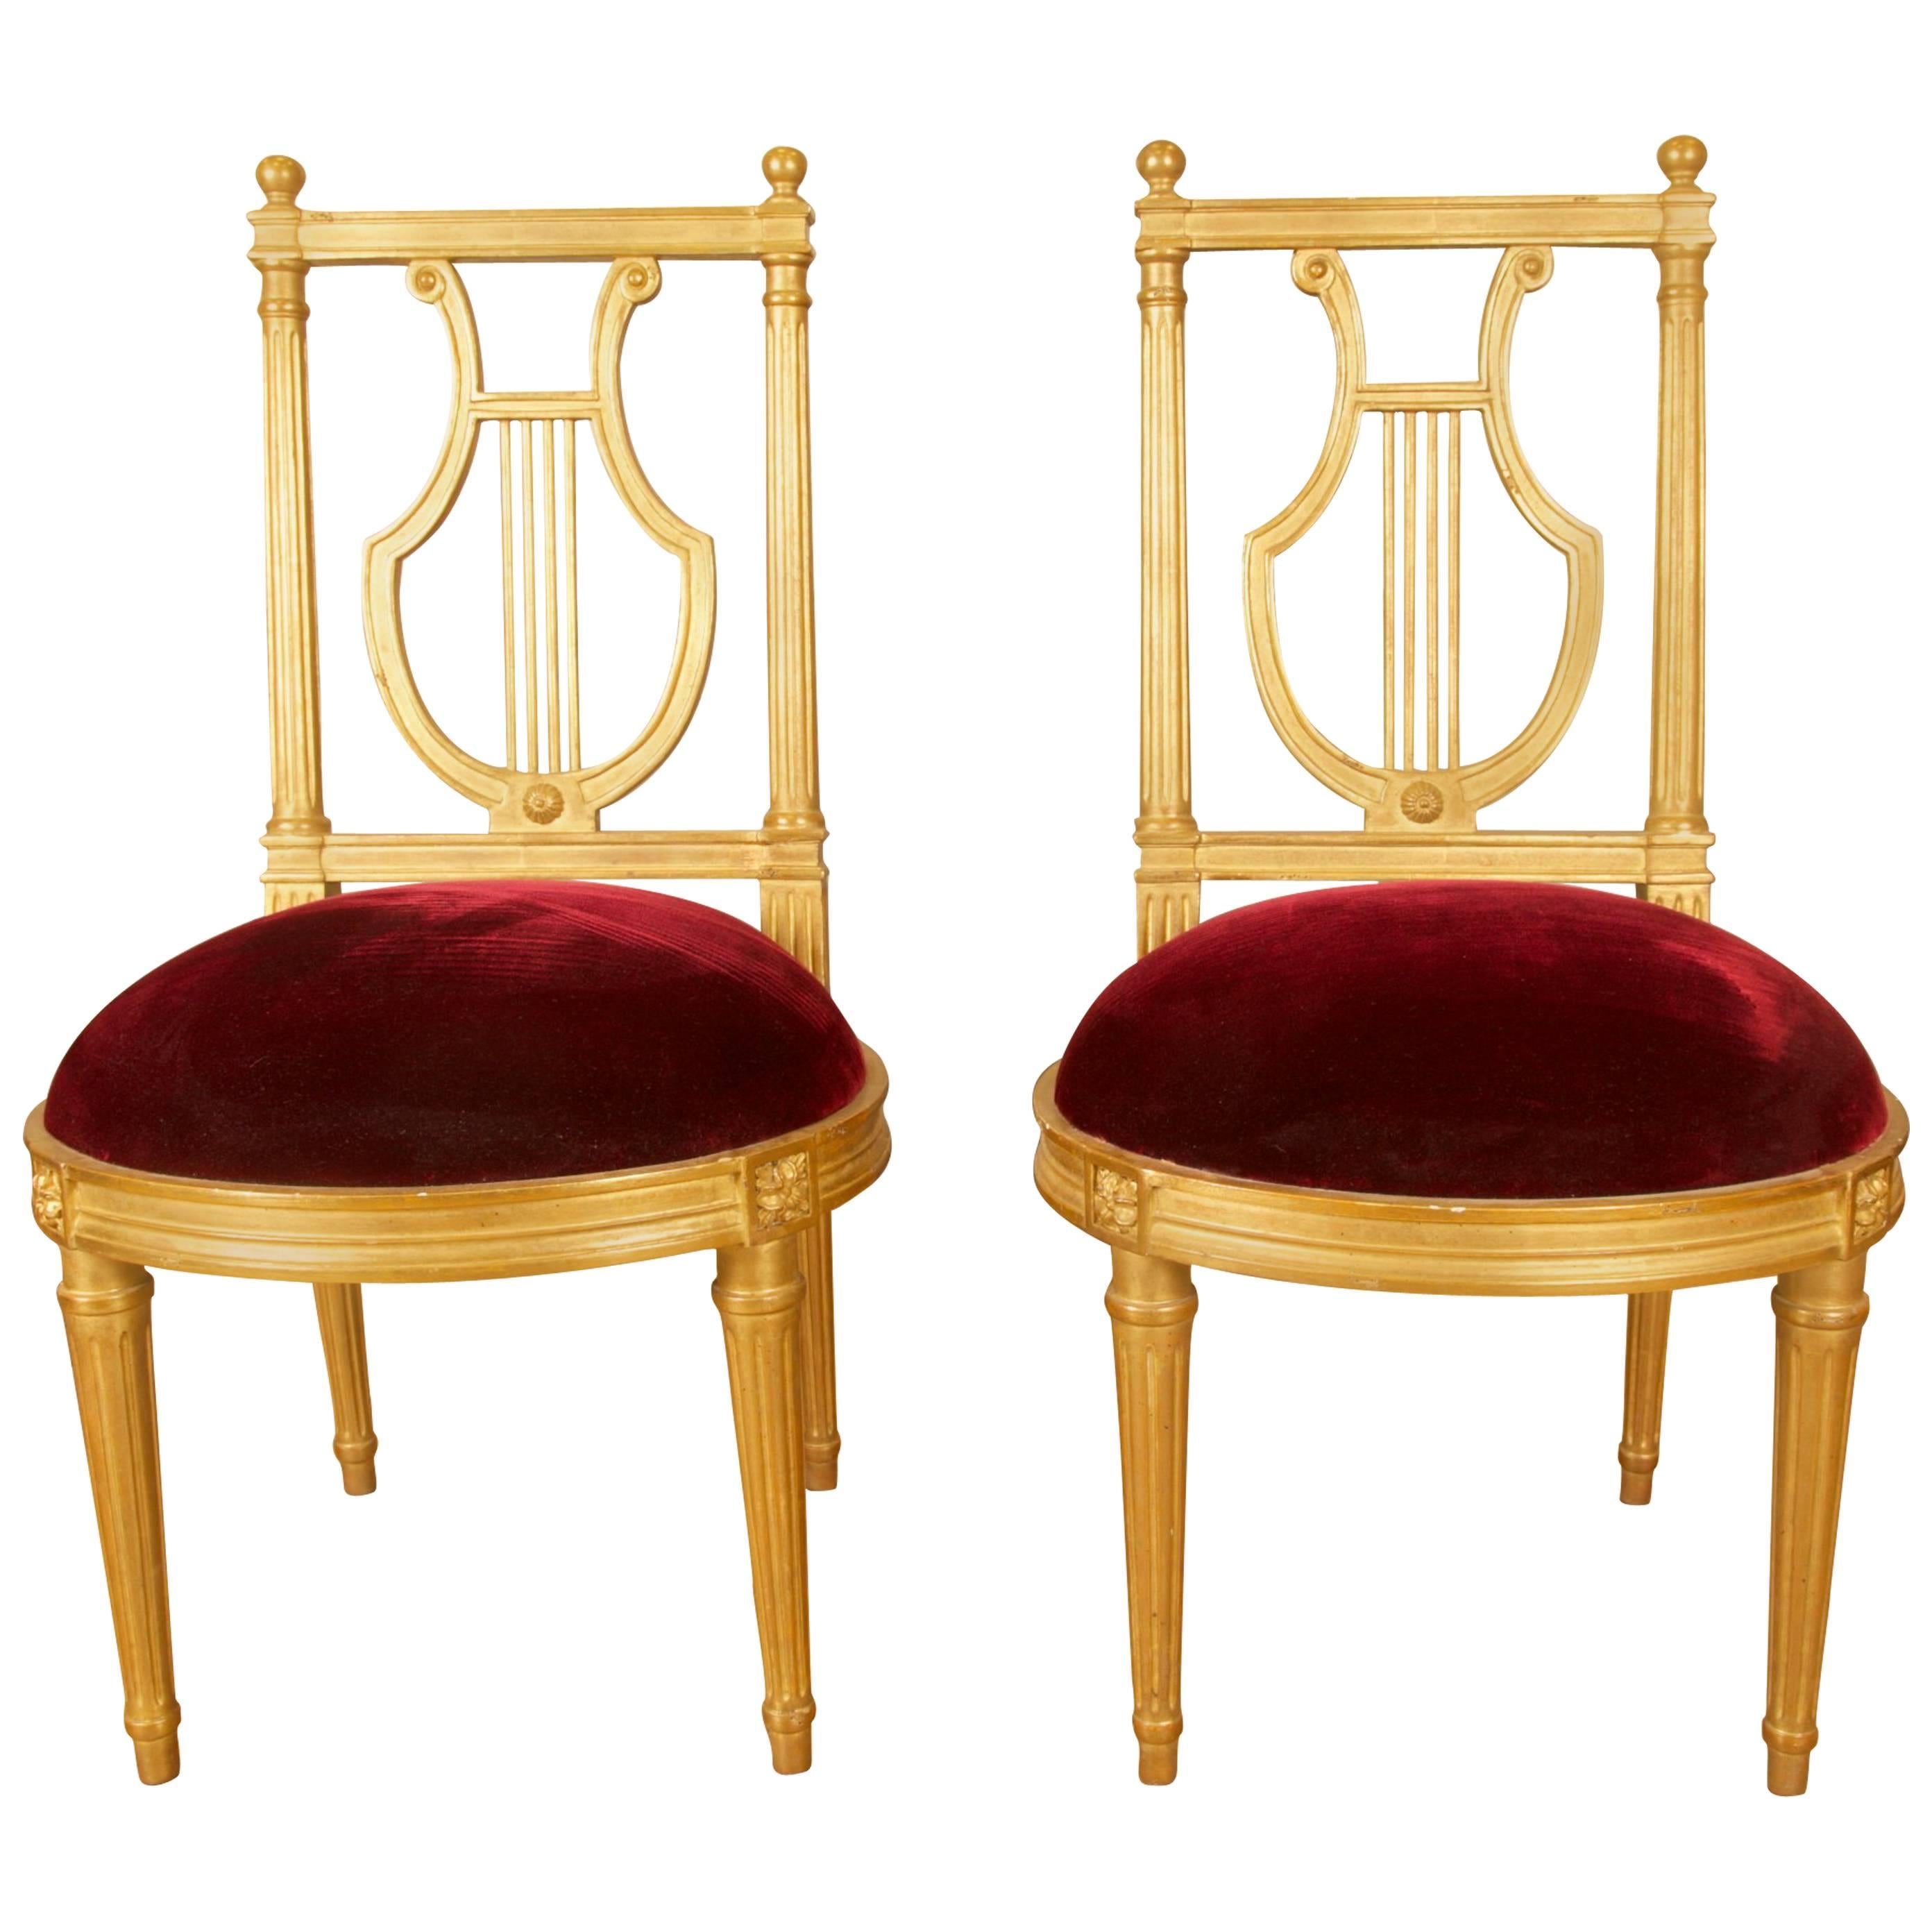 Pair of Louis XVI Chairs